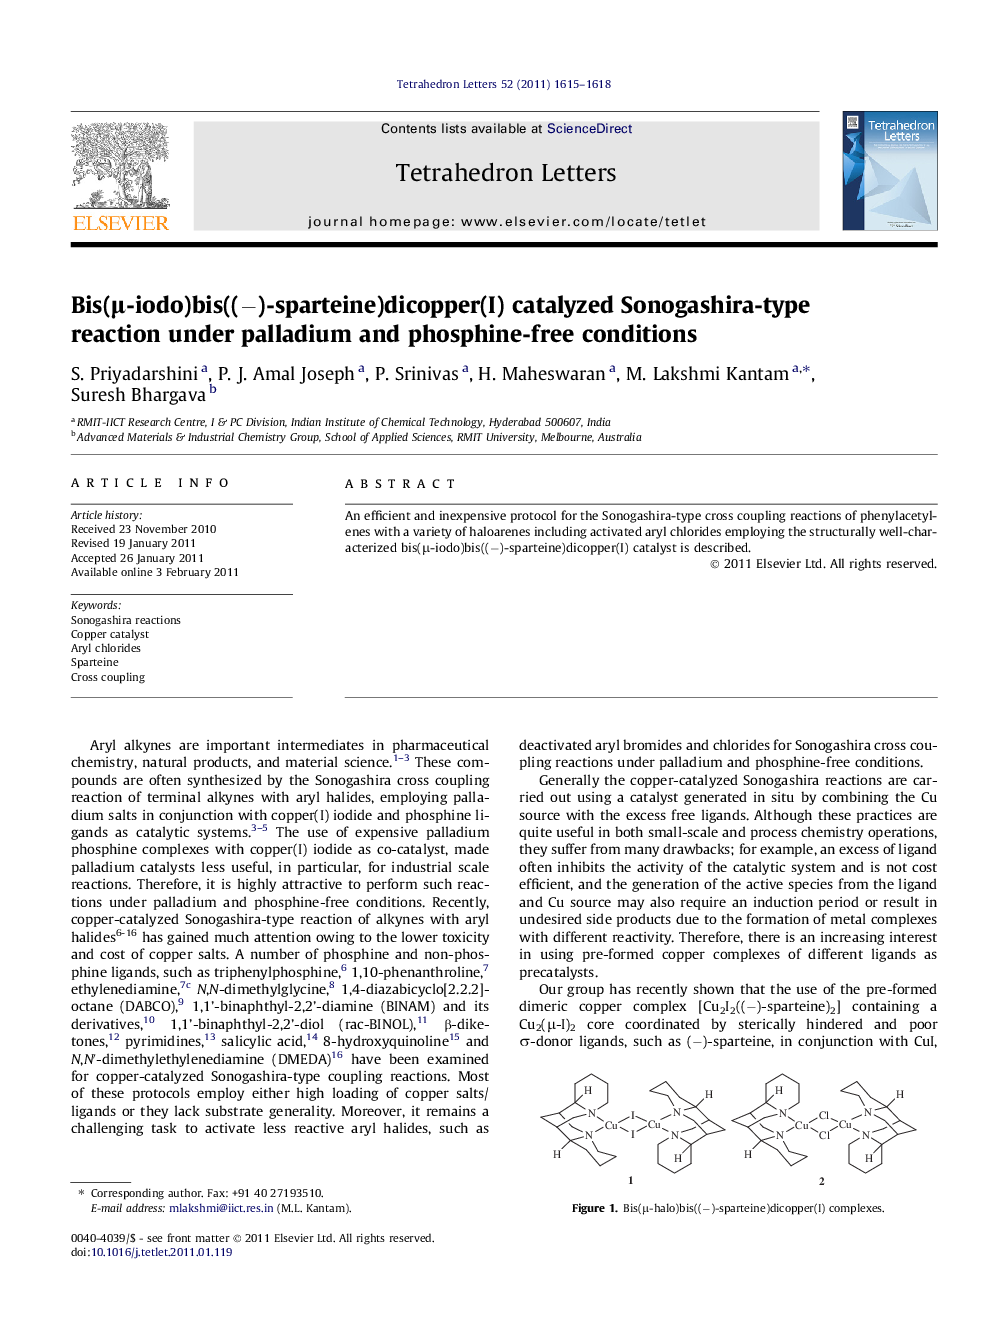 Bis(Î¼-iodo)bis((â)-sparteine)dicopper(I) catalyzed Sonogashira-type reaction under palladium and phosphine-free conditions